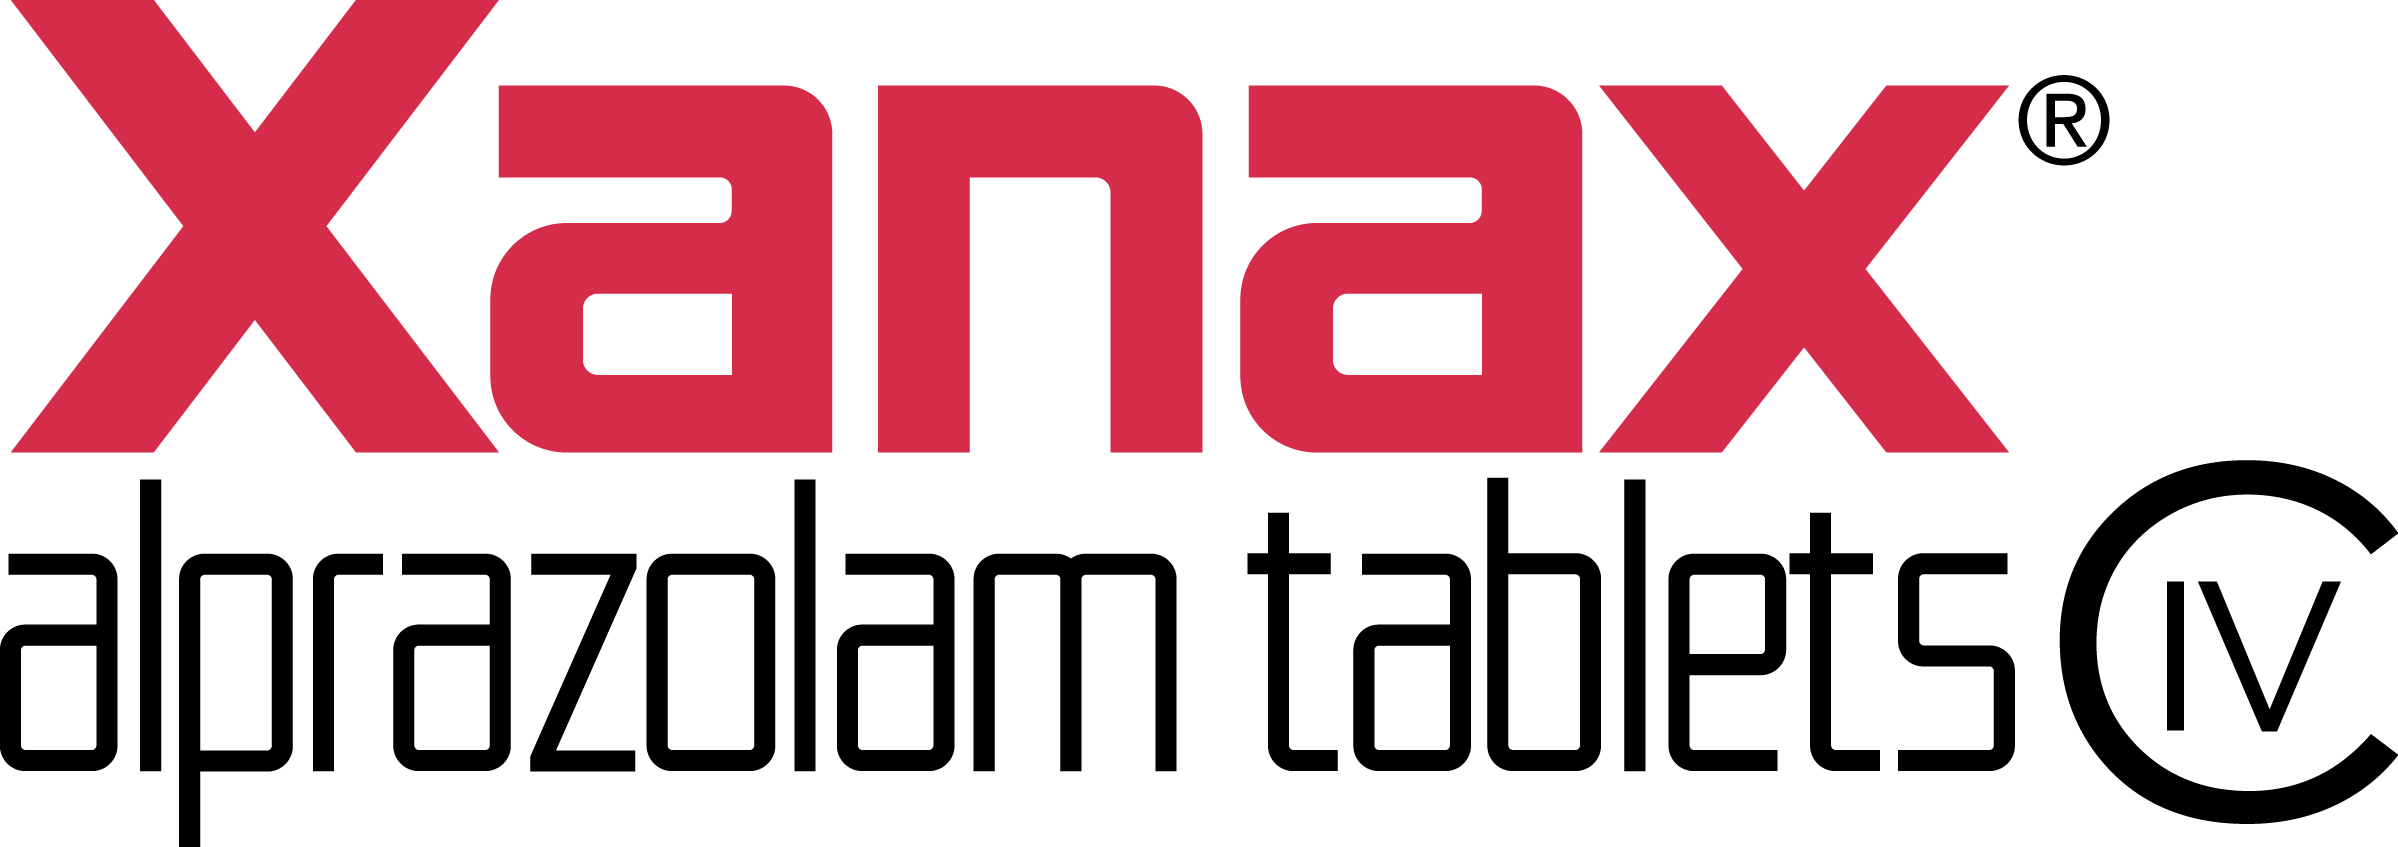 Anxiety Treatment | XANAX (alprazolam tablets) 